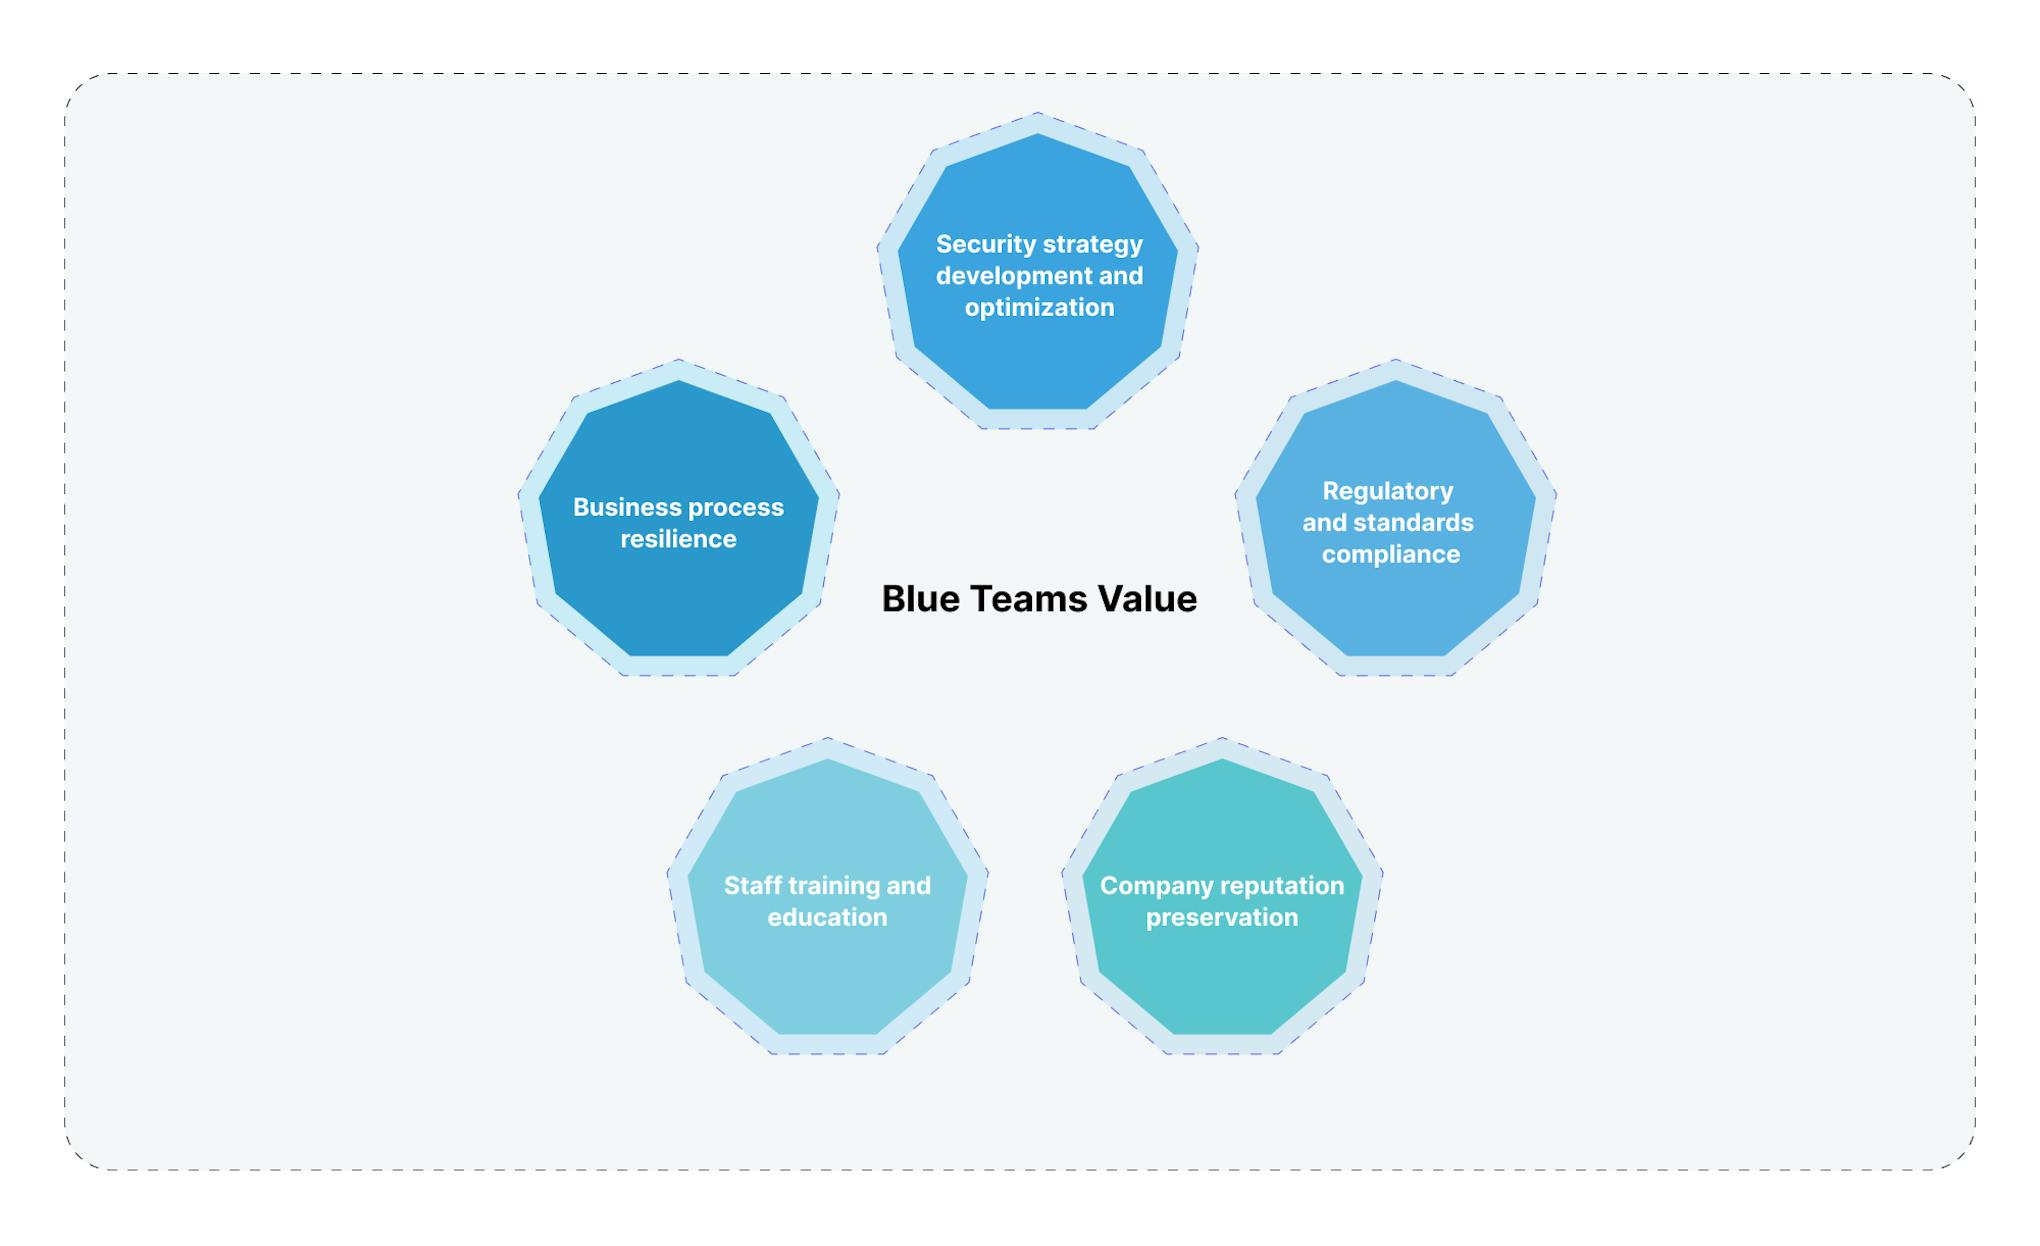 Value blue teams bring to companies